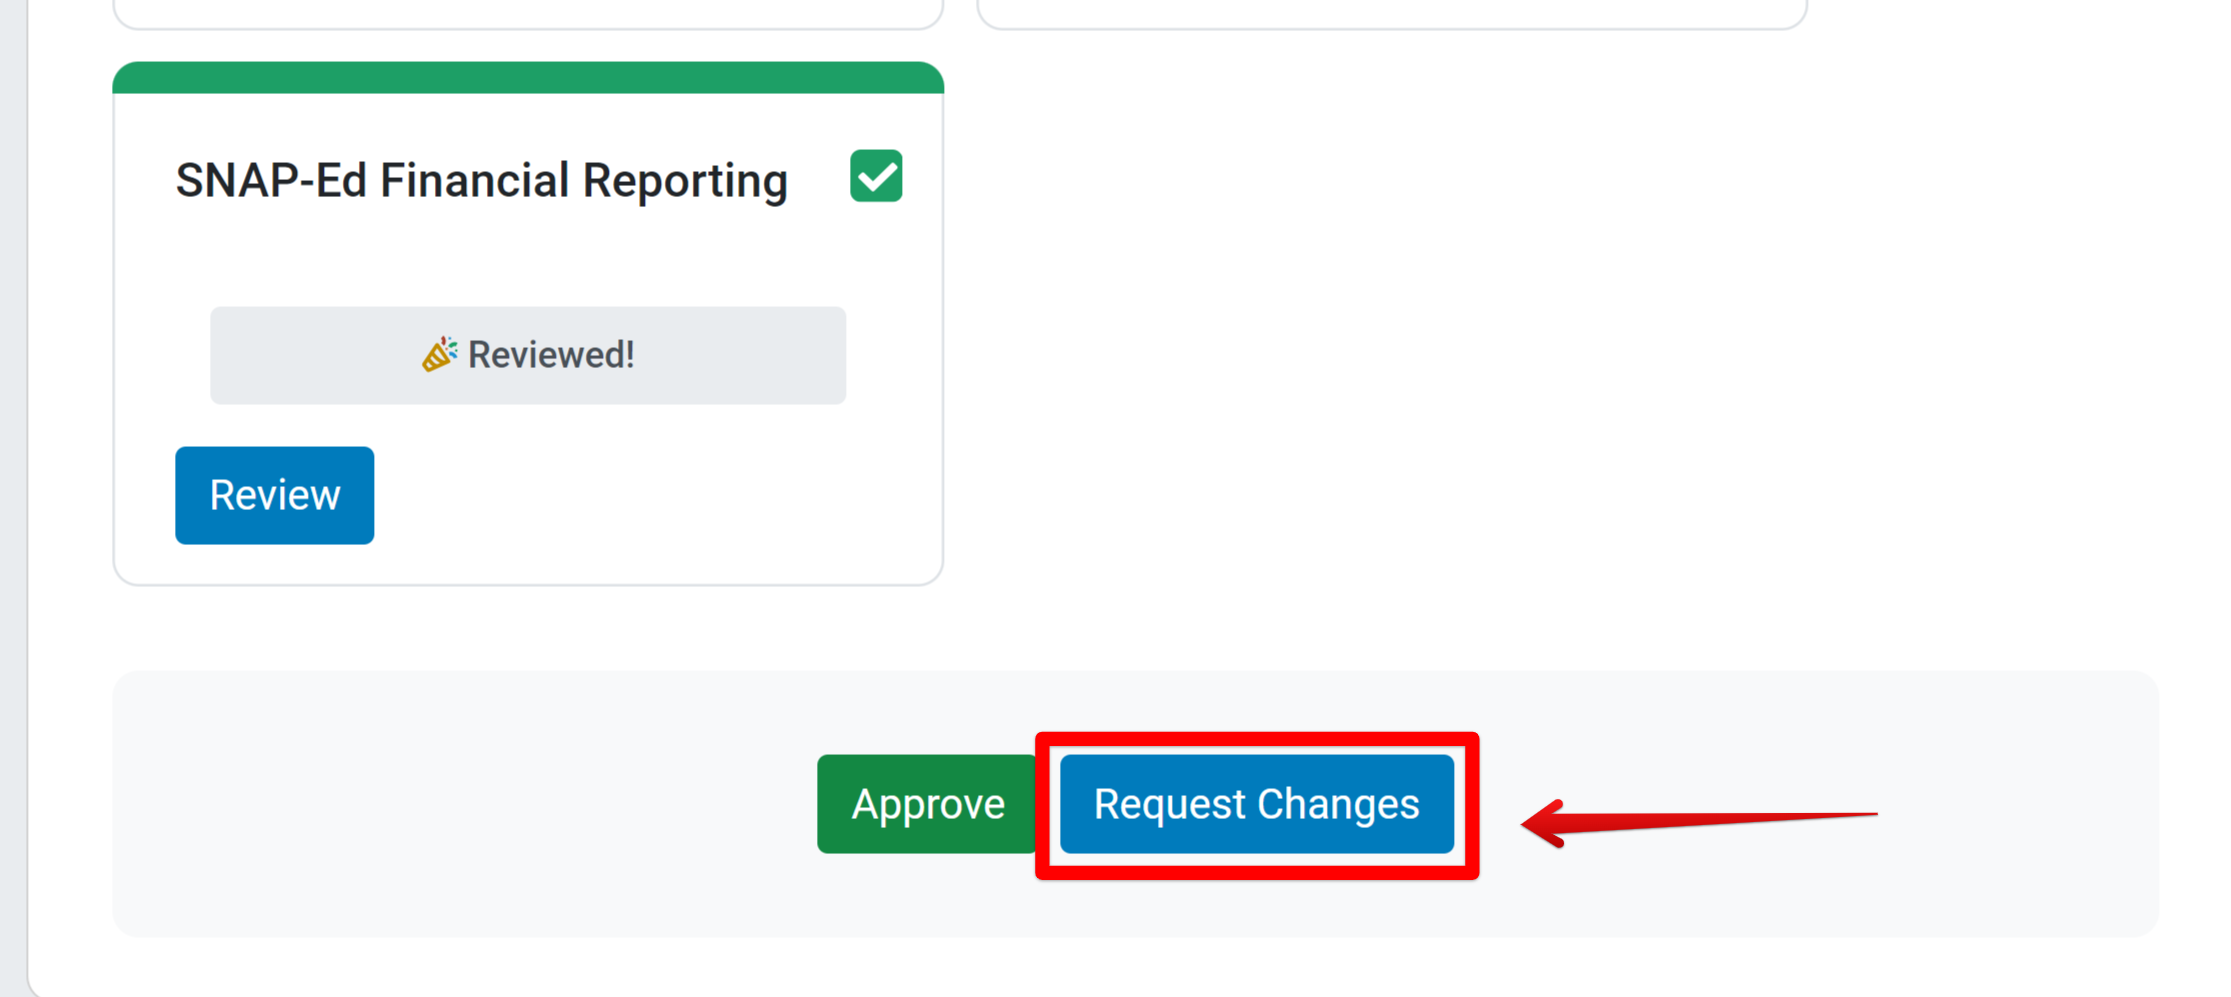 Request Changes Button
